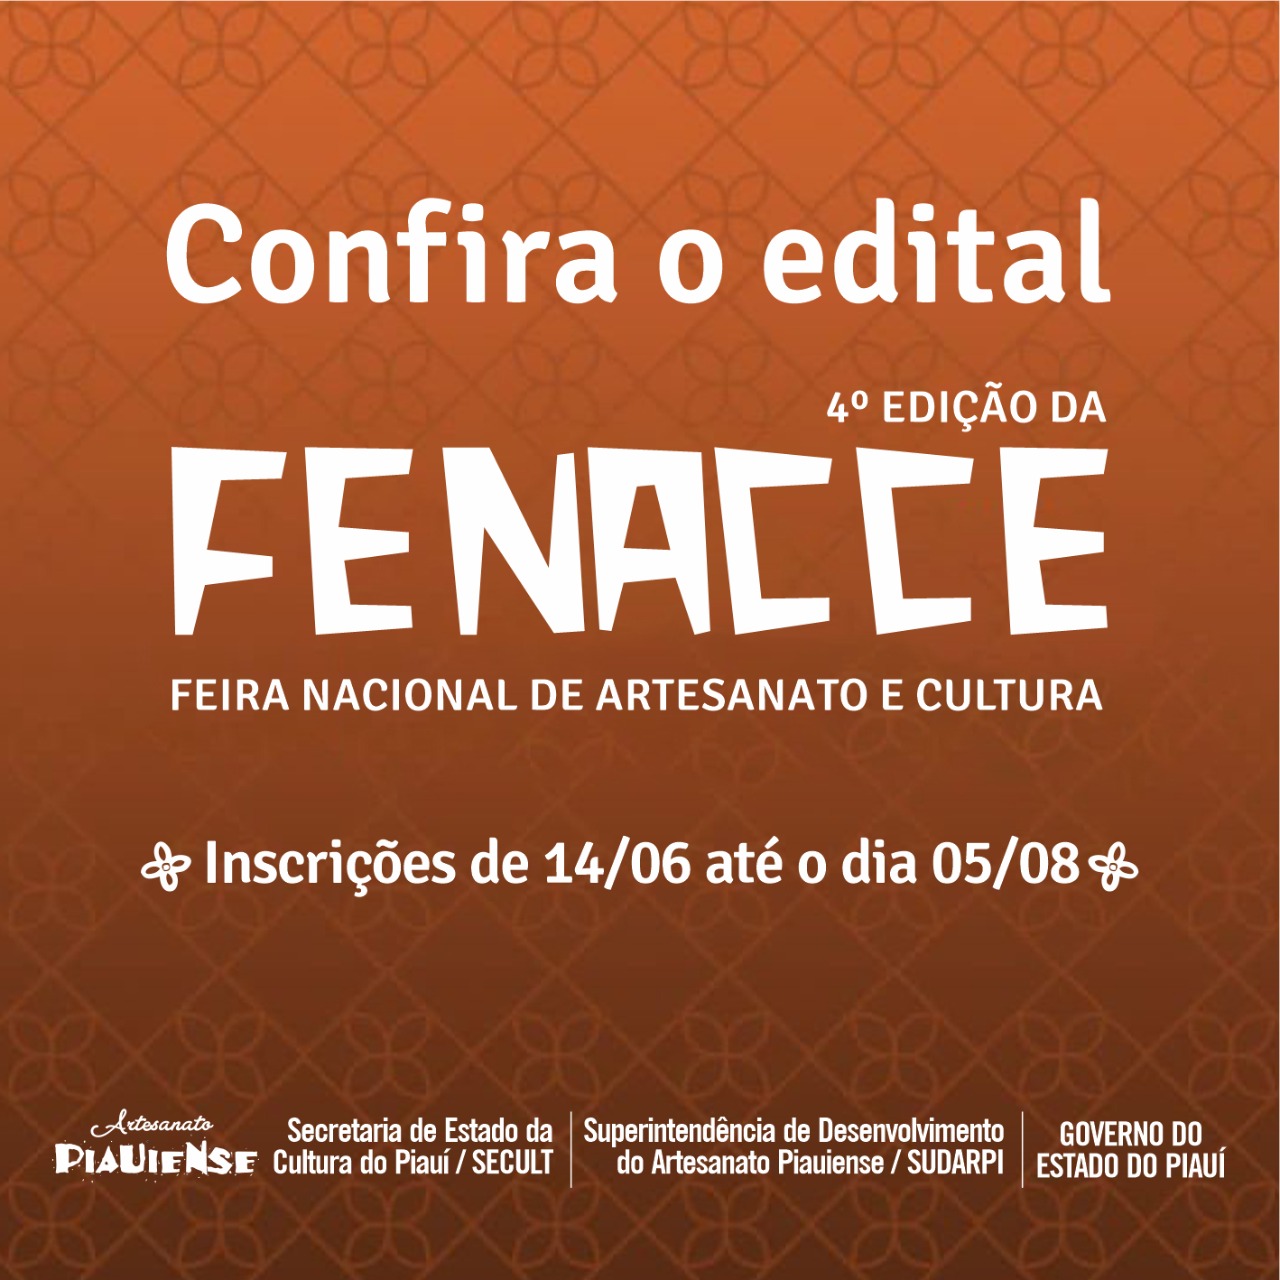 Feira Nacional de Artesanato e Cultura - FENACCE